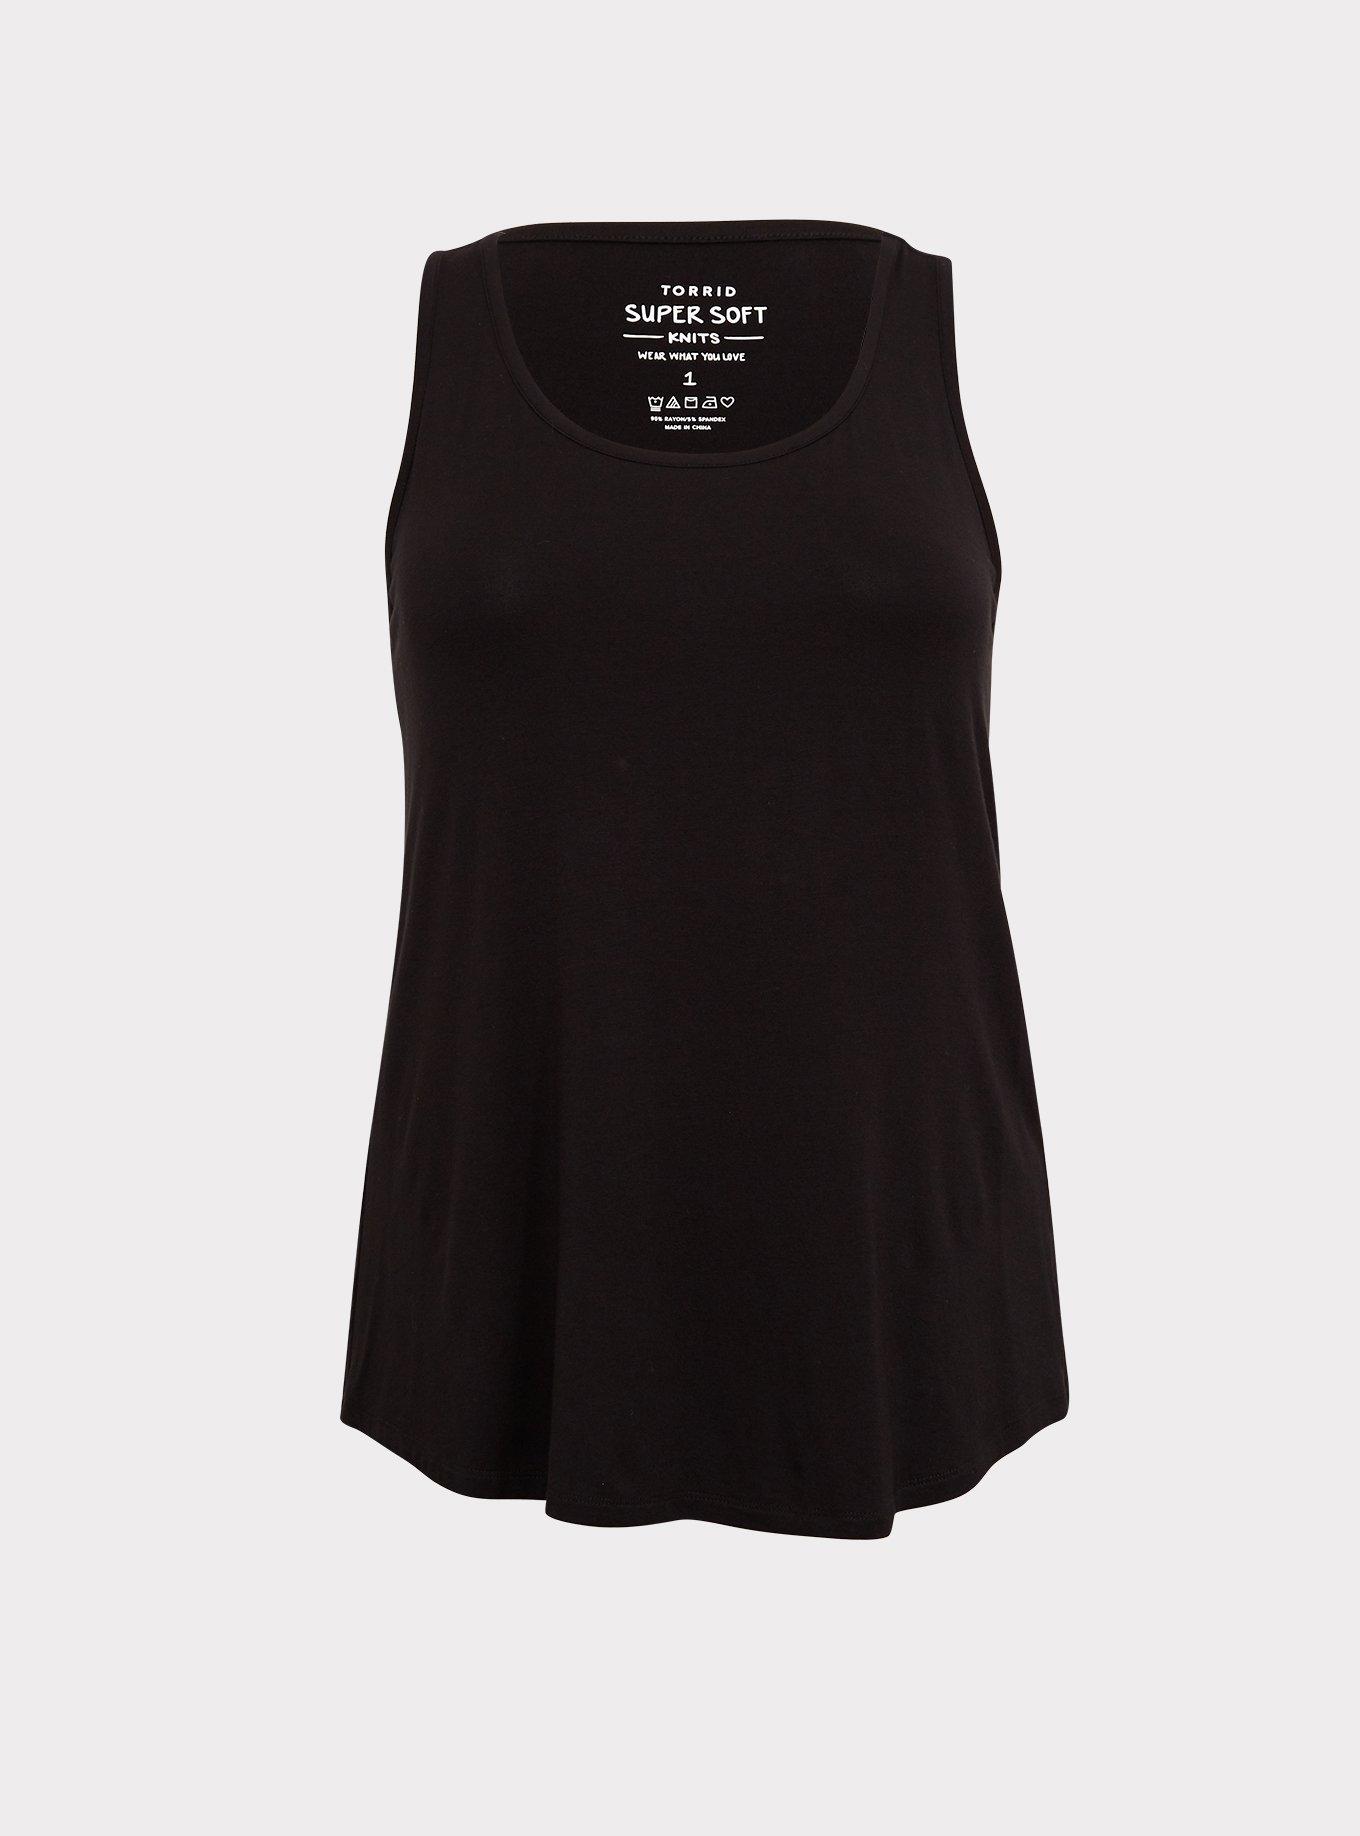 Torrid Womens Black Sleeveless Shirt Top 4 4X